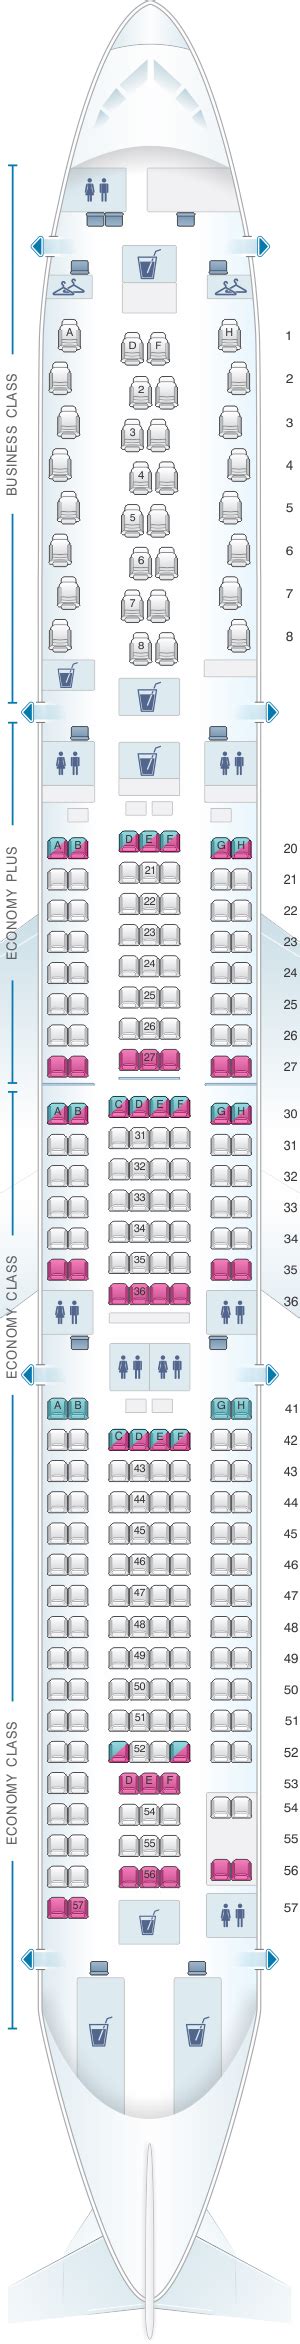 Lufthansa A330 300 Seat Map